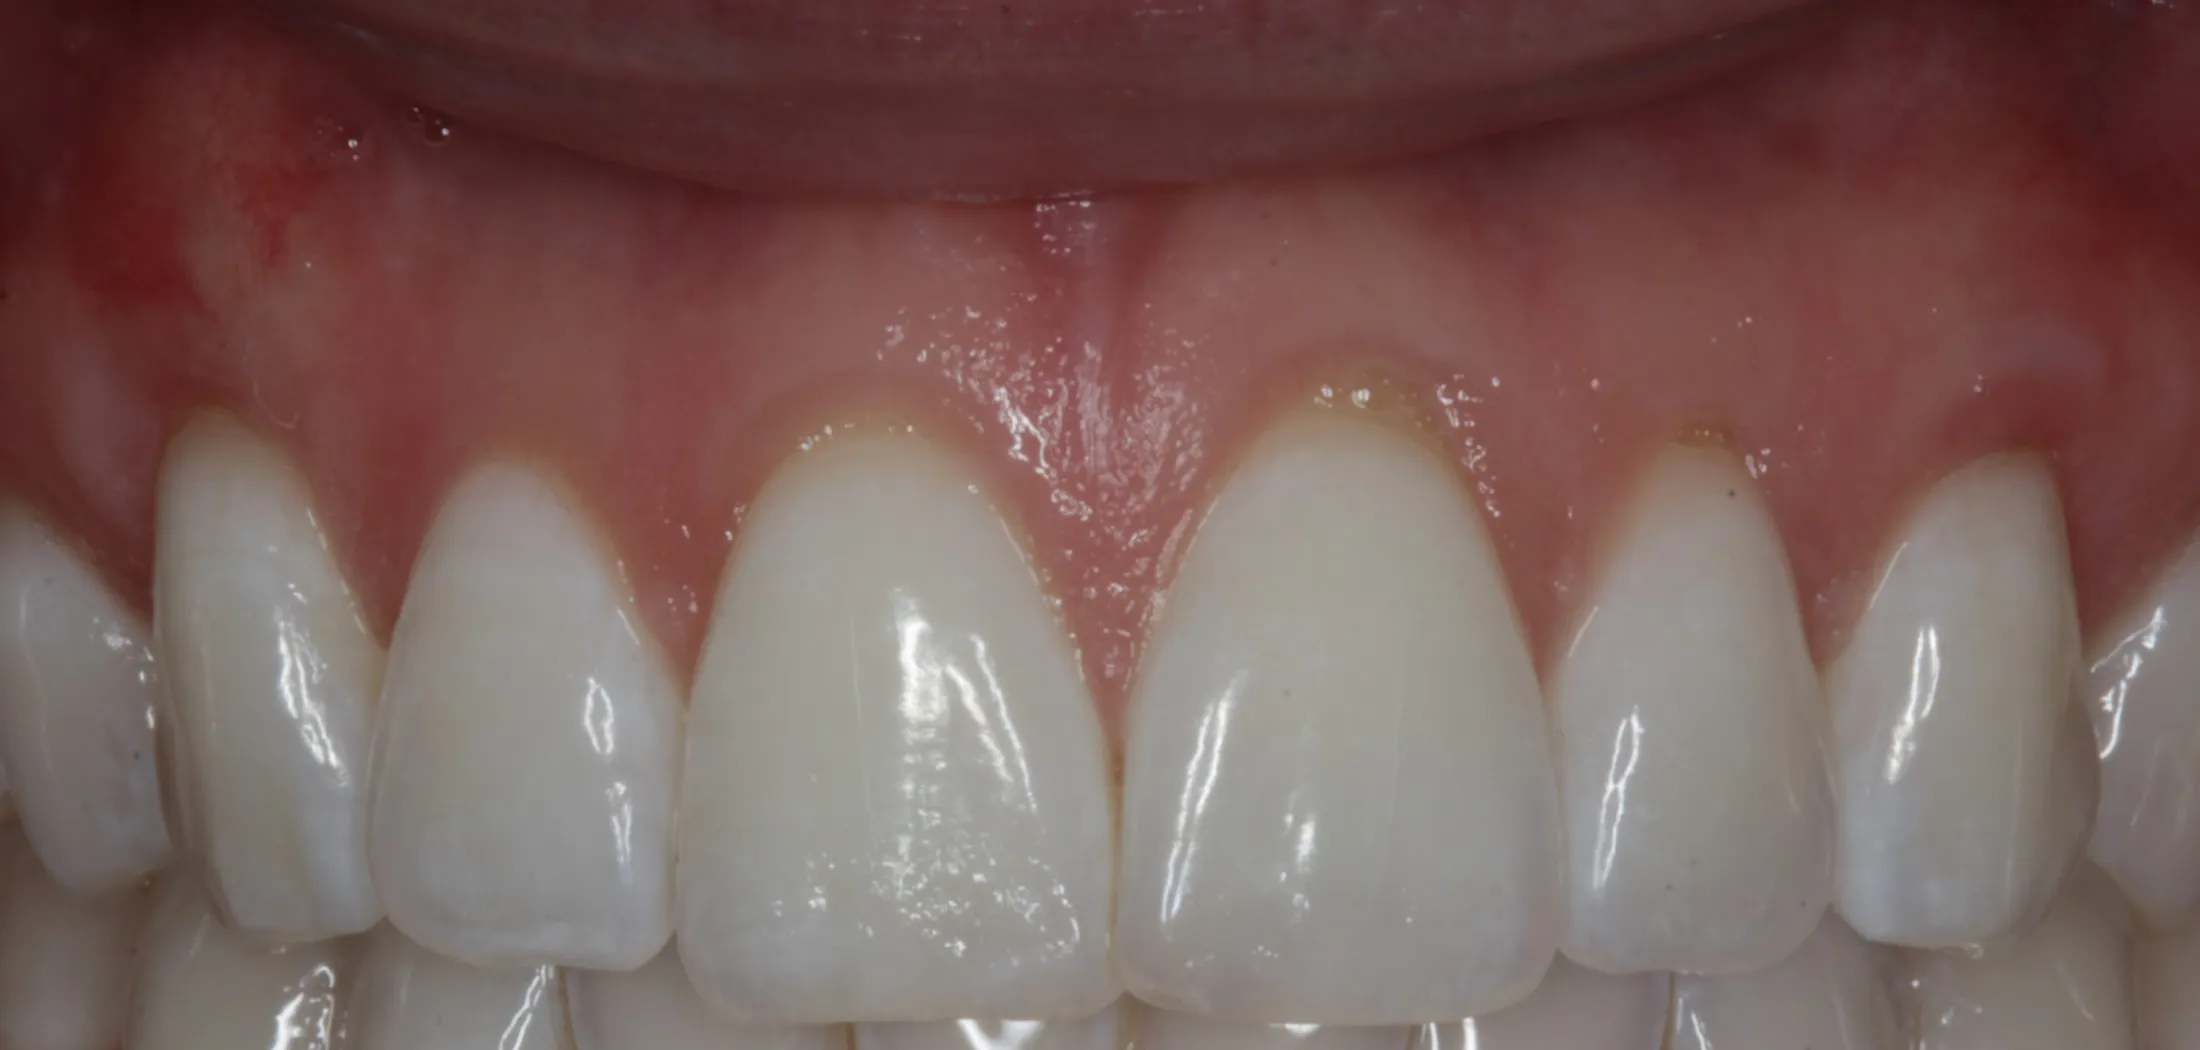 Enhanced gum health after professional treatment at Westport Periodontics.